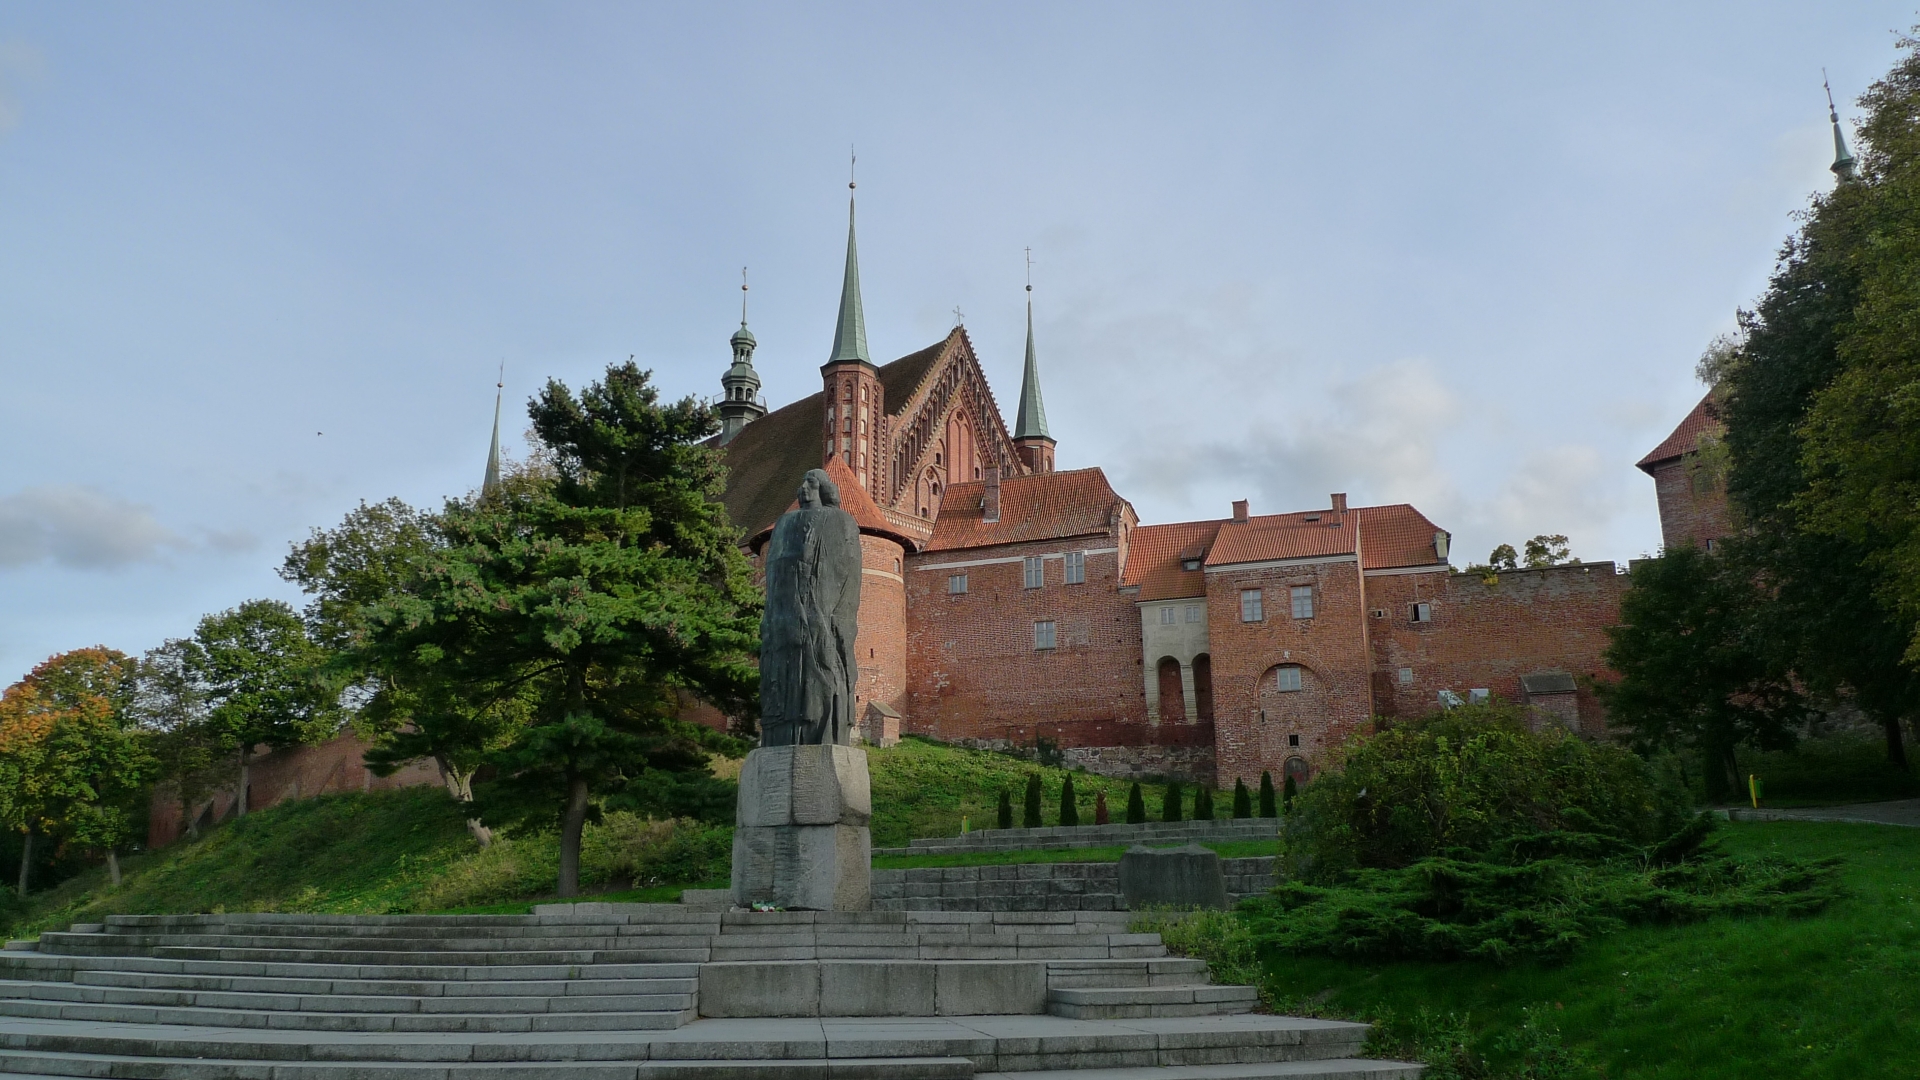 329714 descargar imagen religioso, catedral de frombork, catedrales: fondos de pantalla y protectores de pantalla gratis